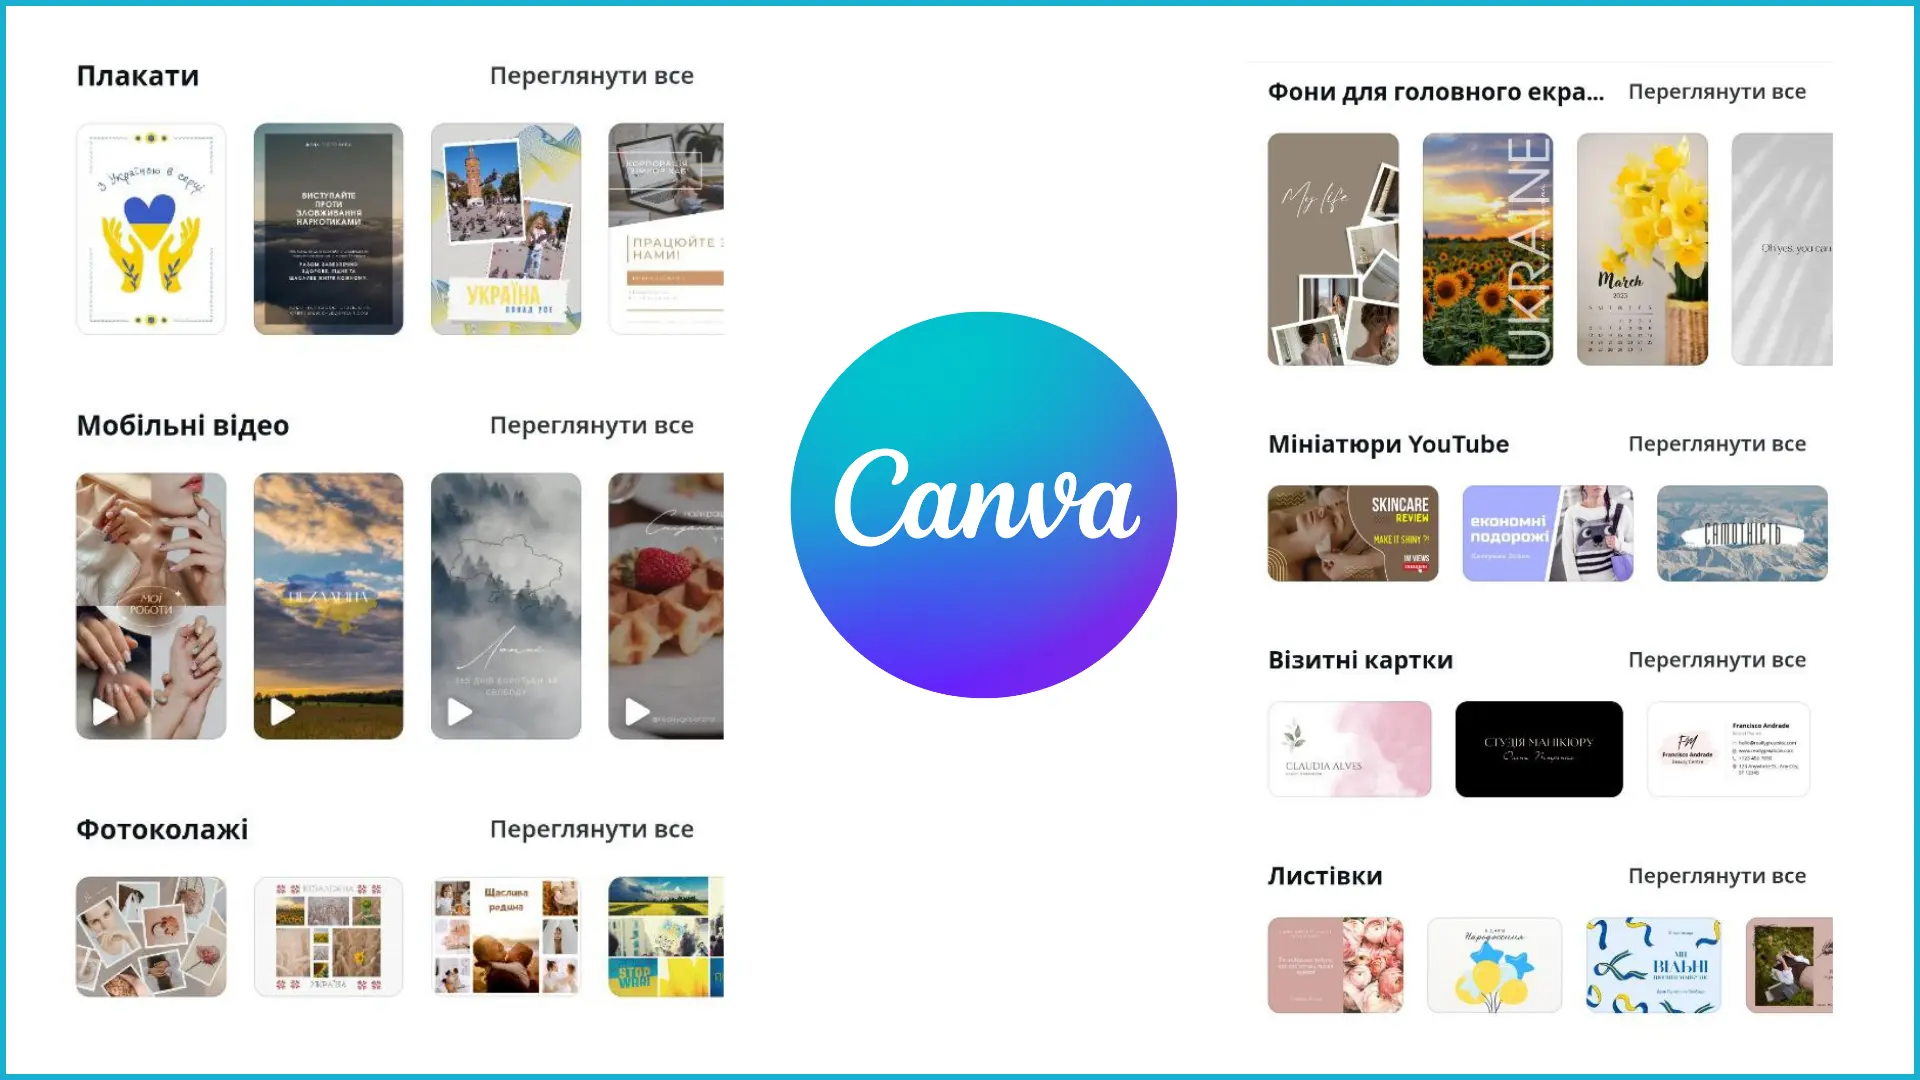 Play market programs for processing photos - Canva